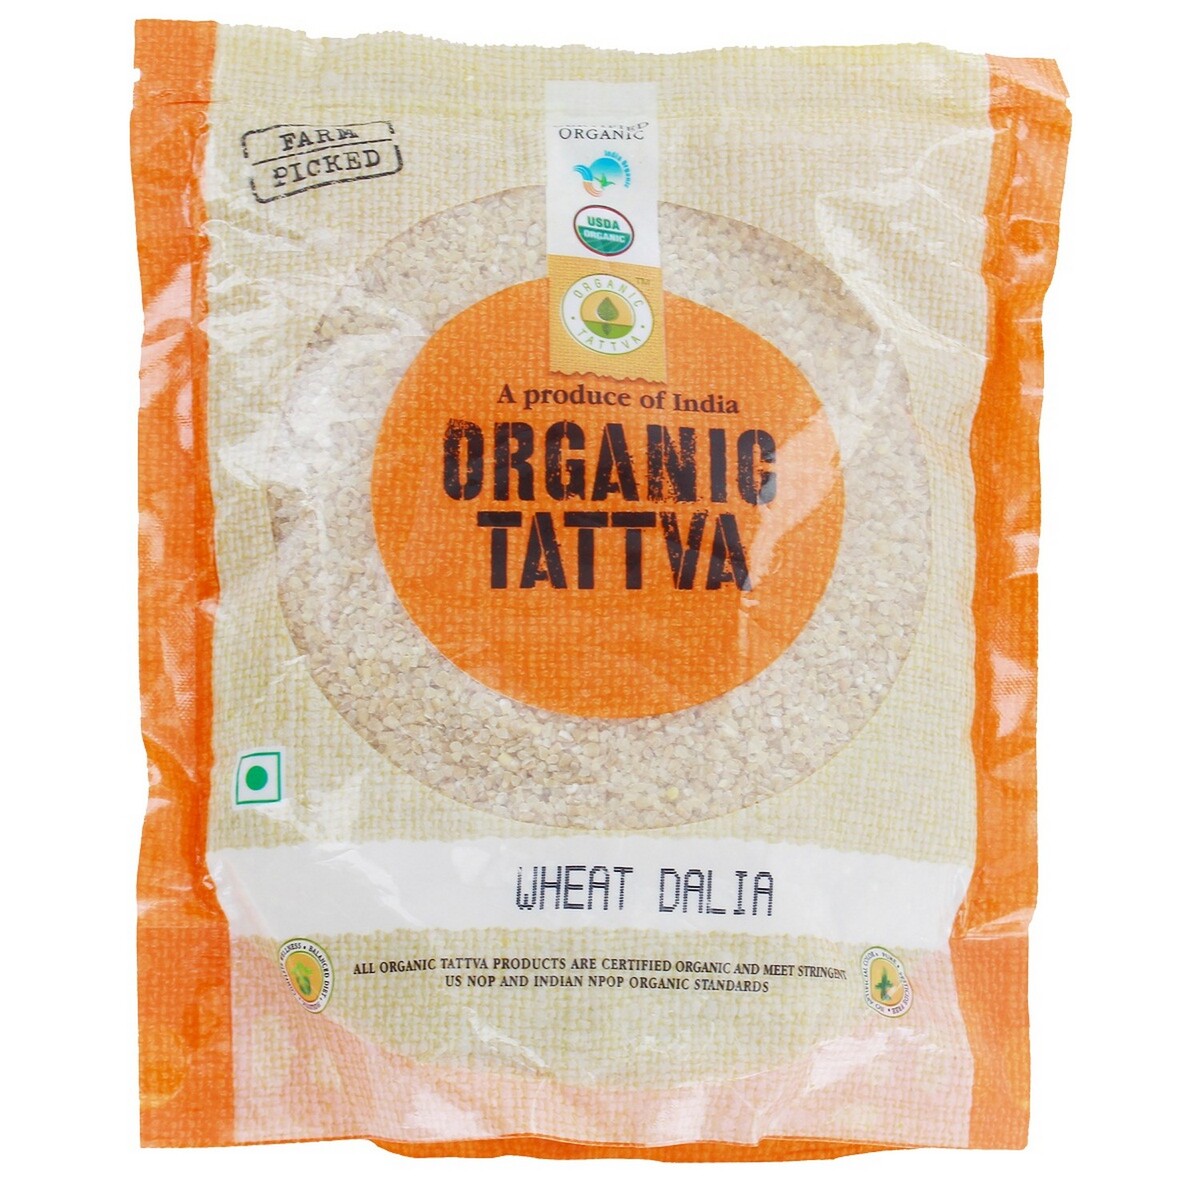 Organic Tattva Organic Wheat Dalia 500g